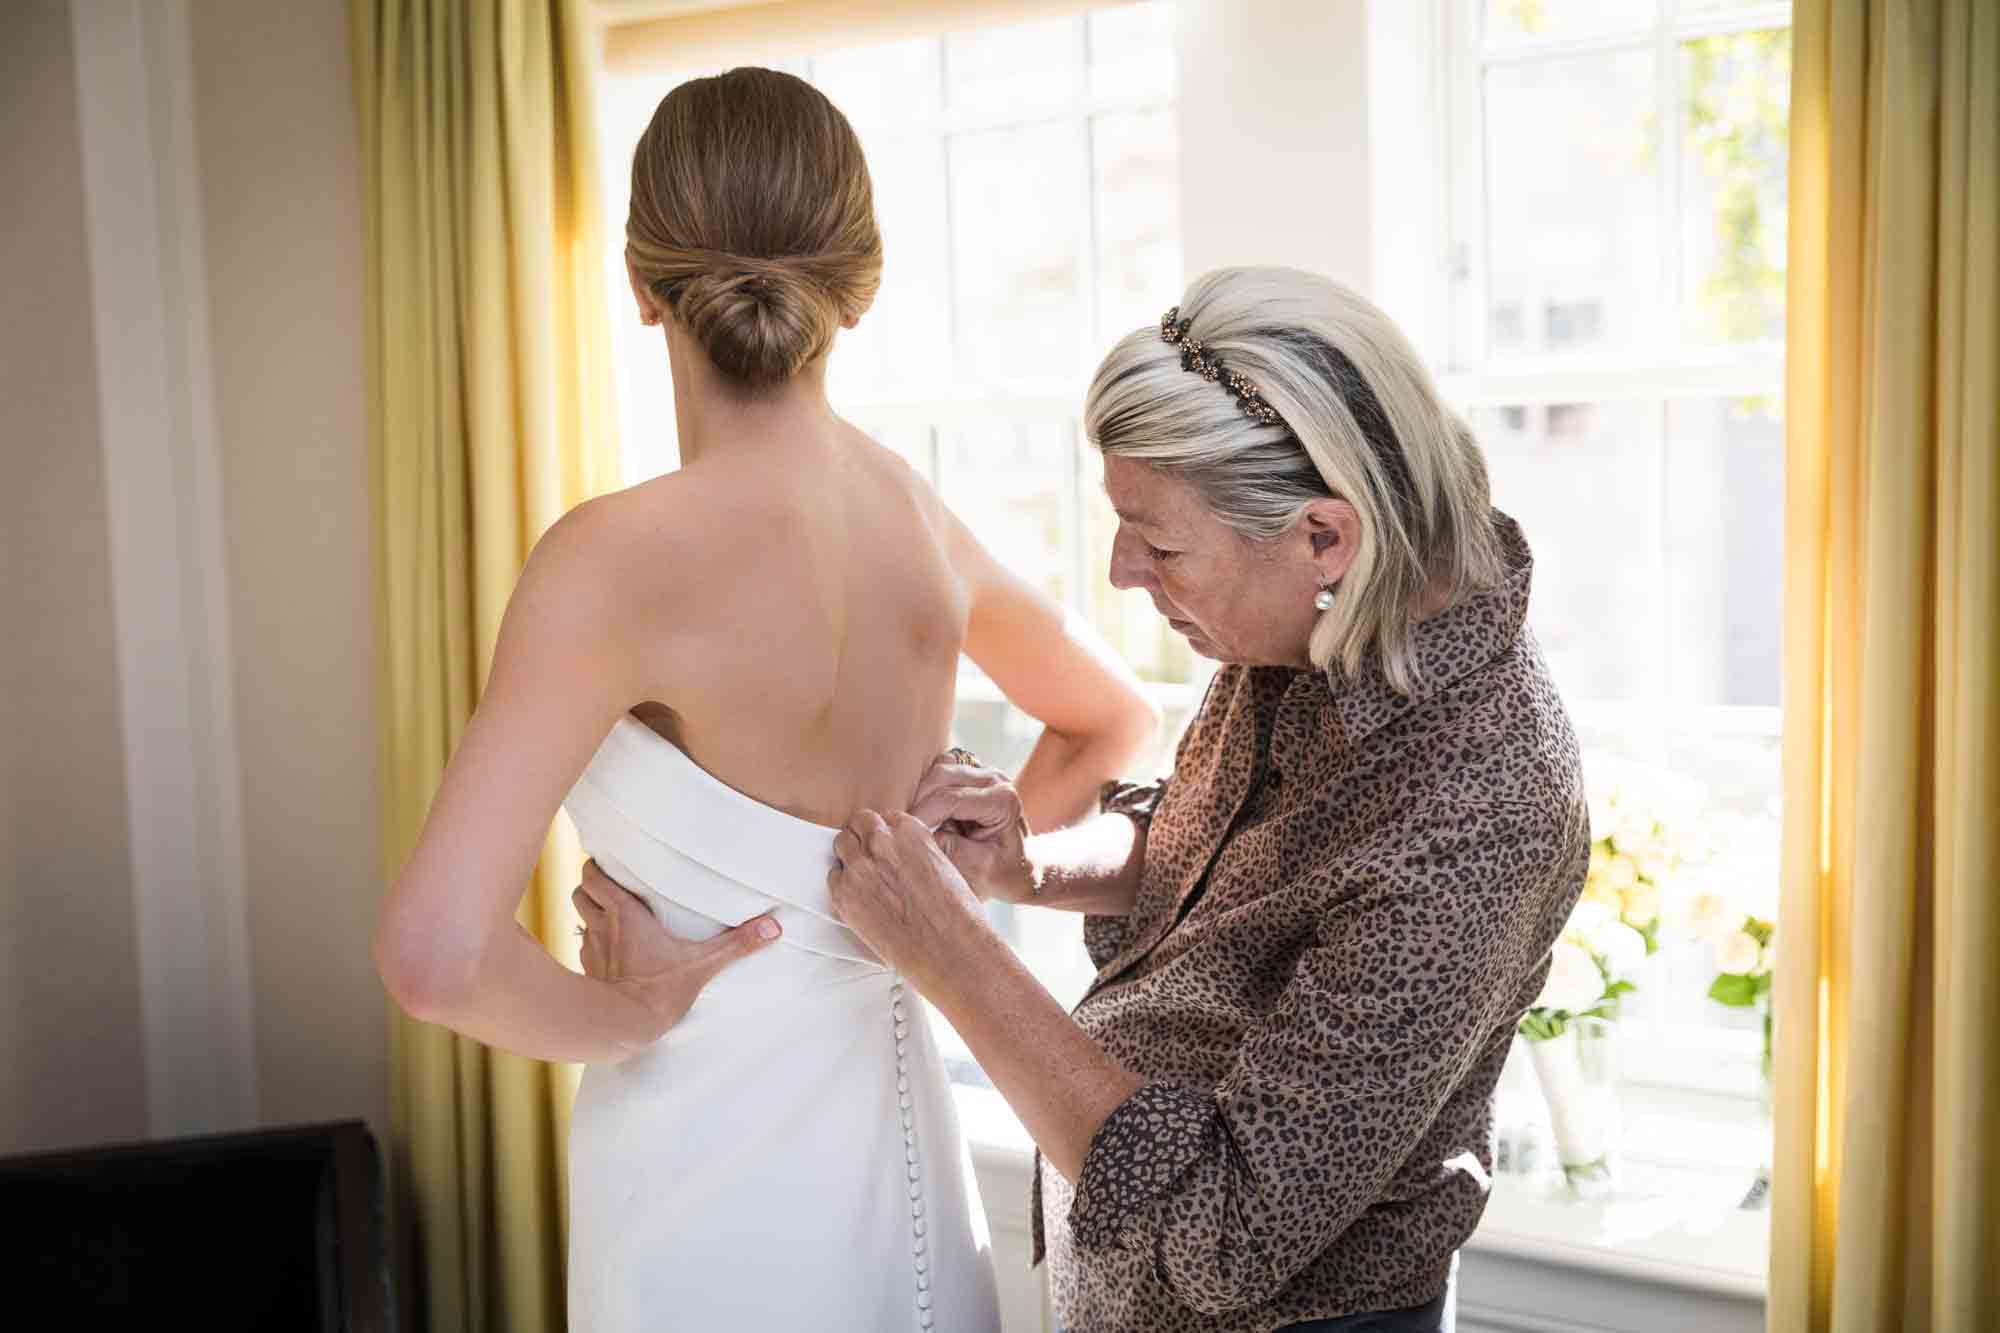 Mother zipping bride's wedding dress in front of window in hotel room